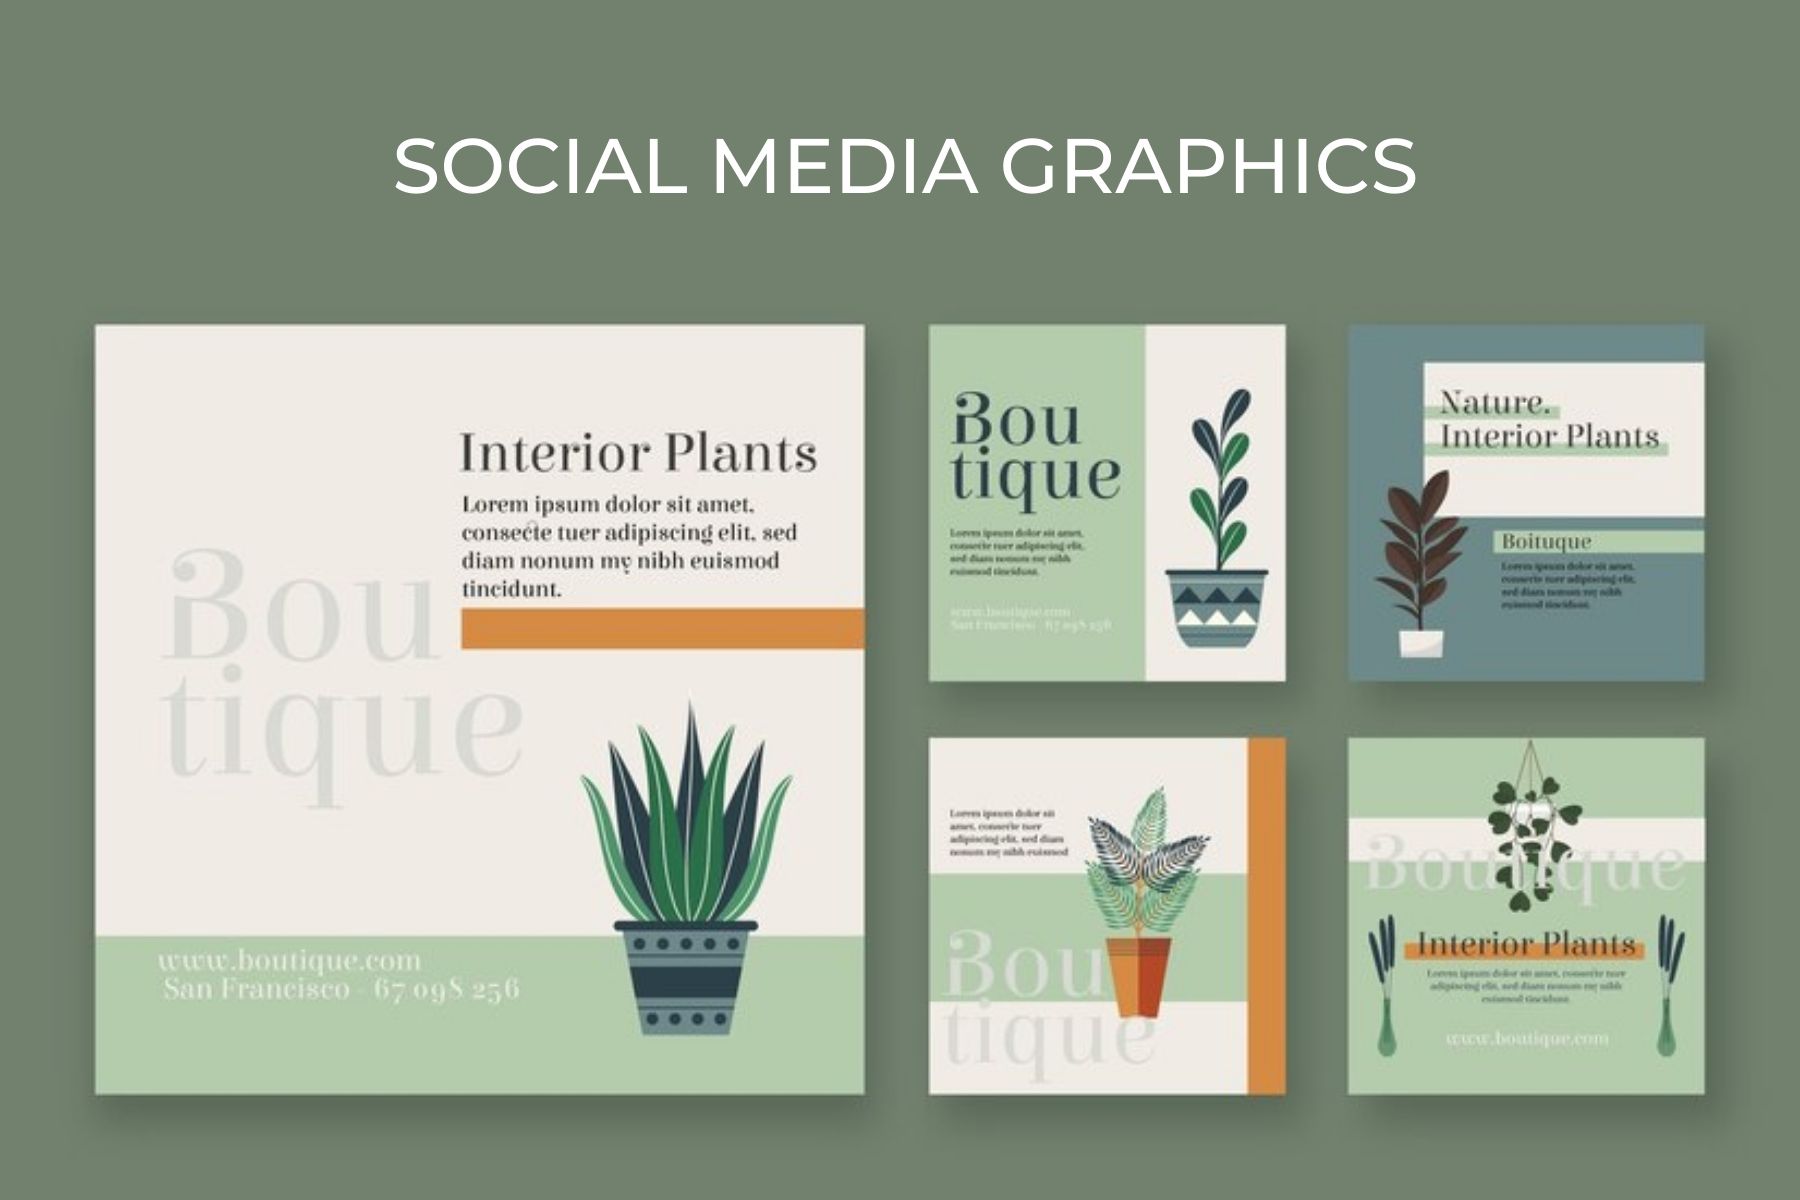 Social media graphics design for a natural wellness company